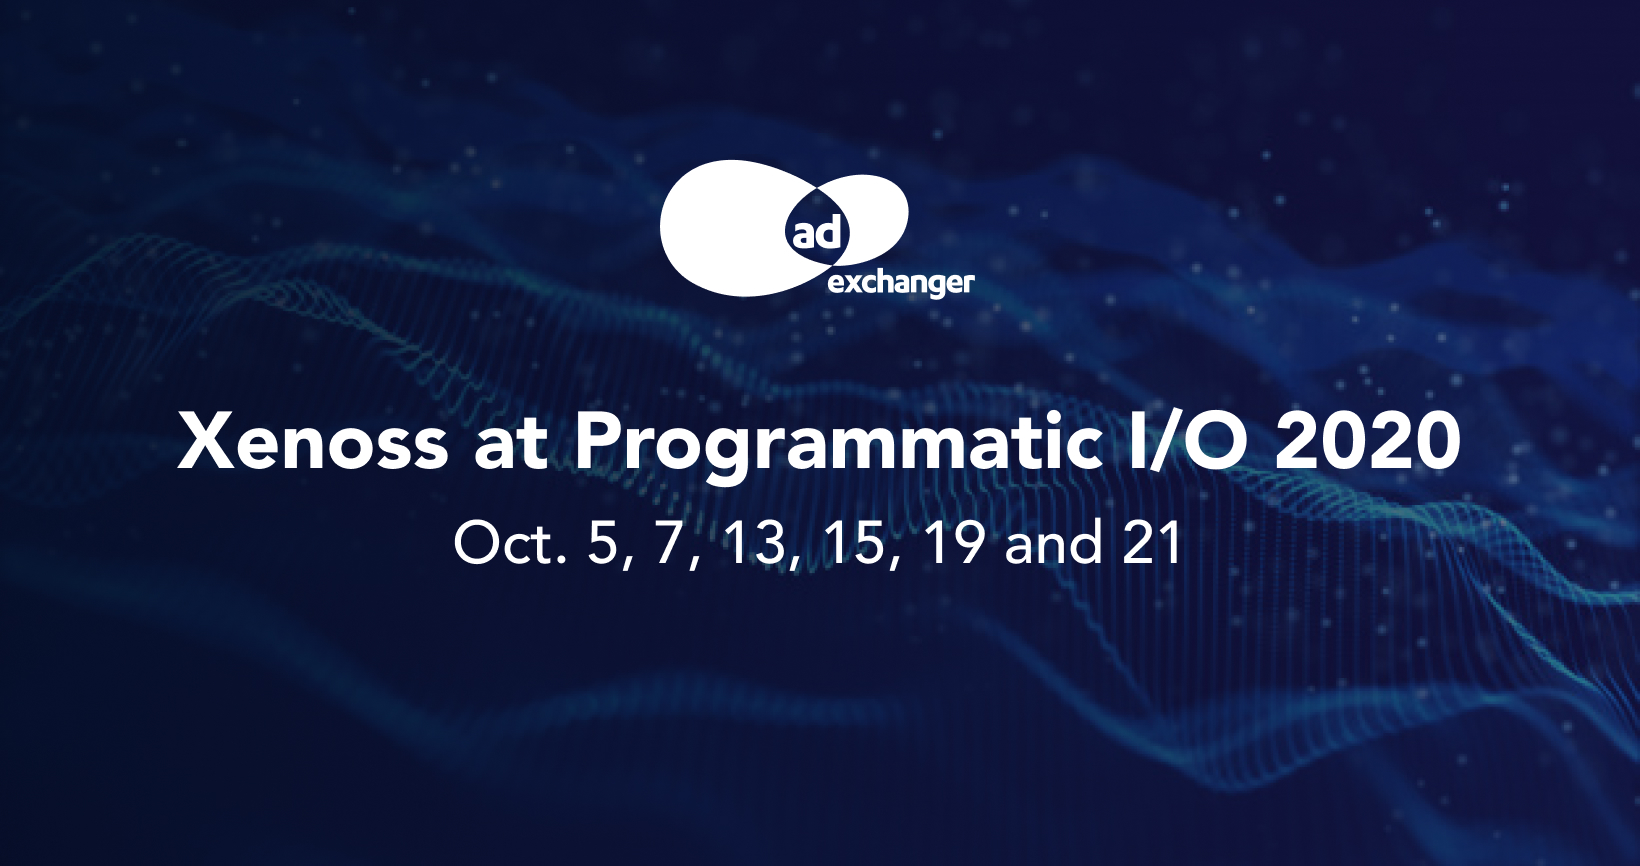 Xenoss Will Participate at AdExhanger’s Programmatic I/O 2020